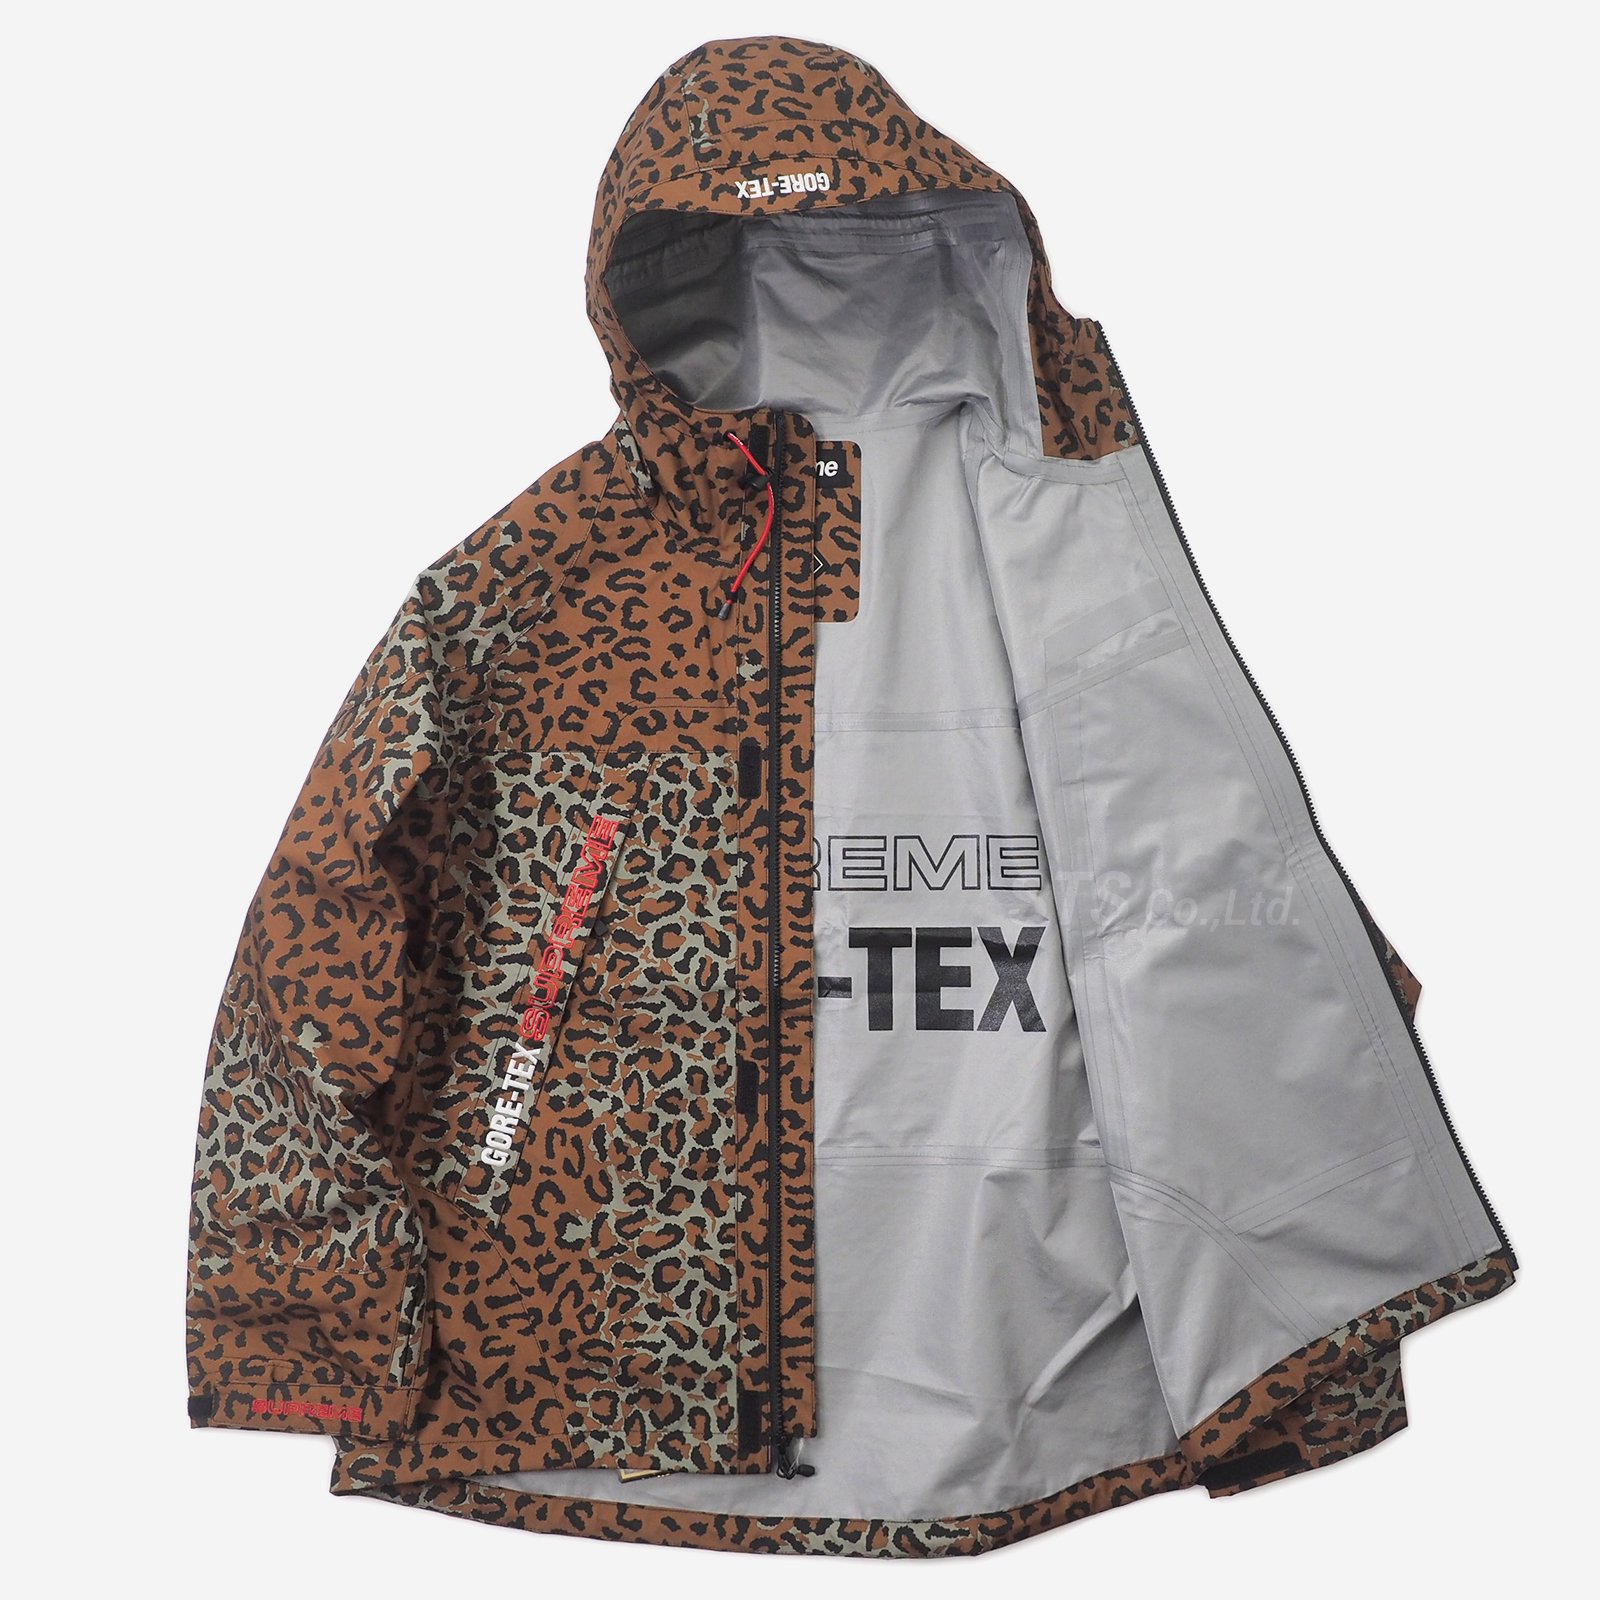 supreme GORE-TEX Taped Seam Jacket large